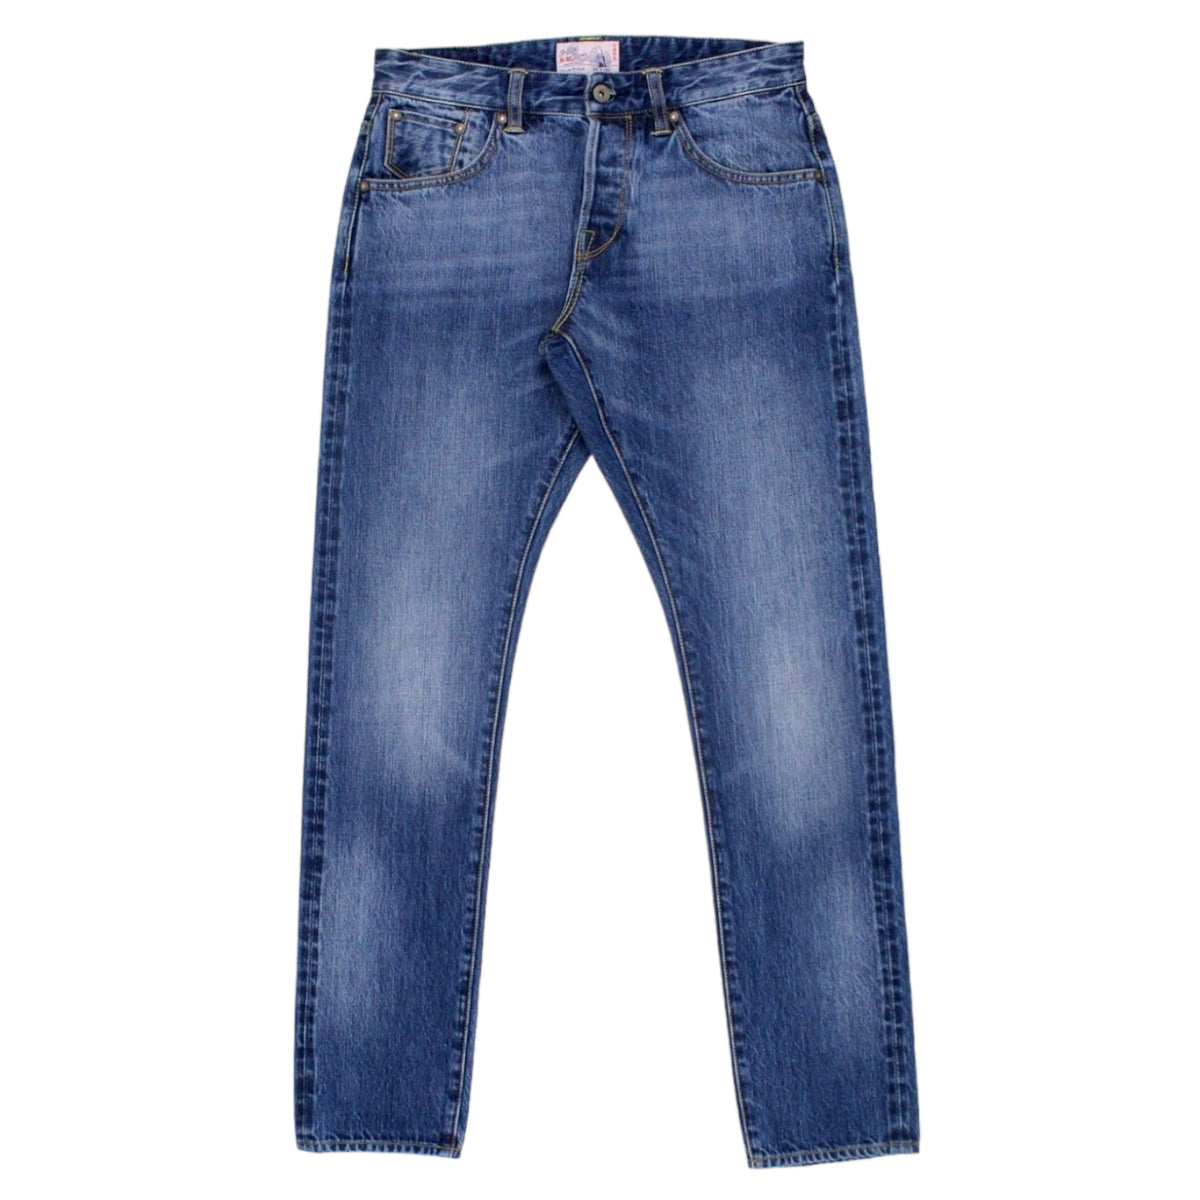 Indigo Farm For Garbstore Blue Jeans